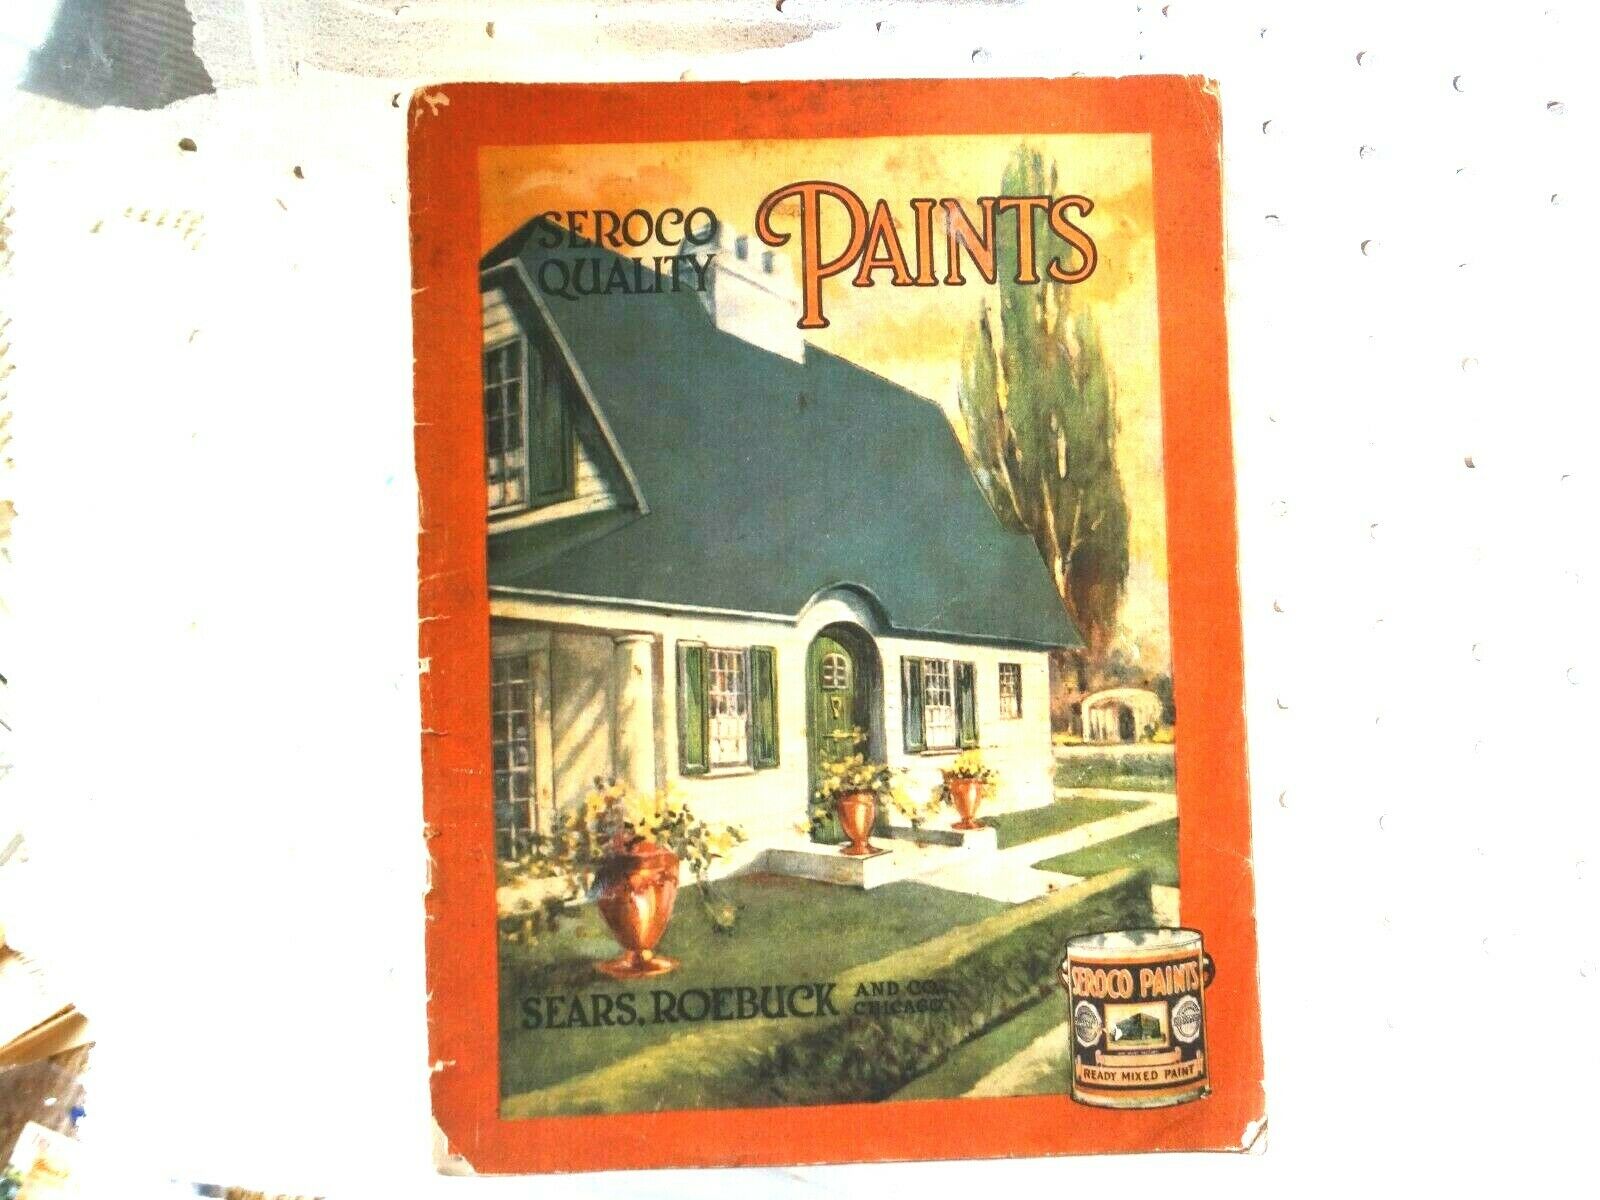 Seroco Quality Paints Booklet – 1916